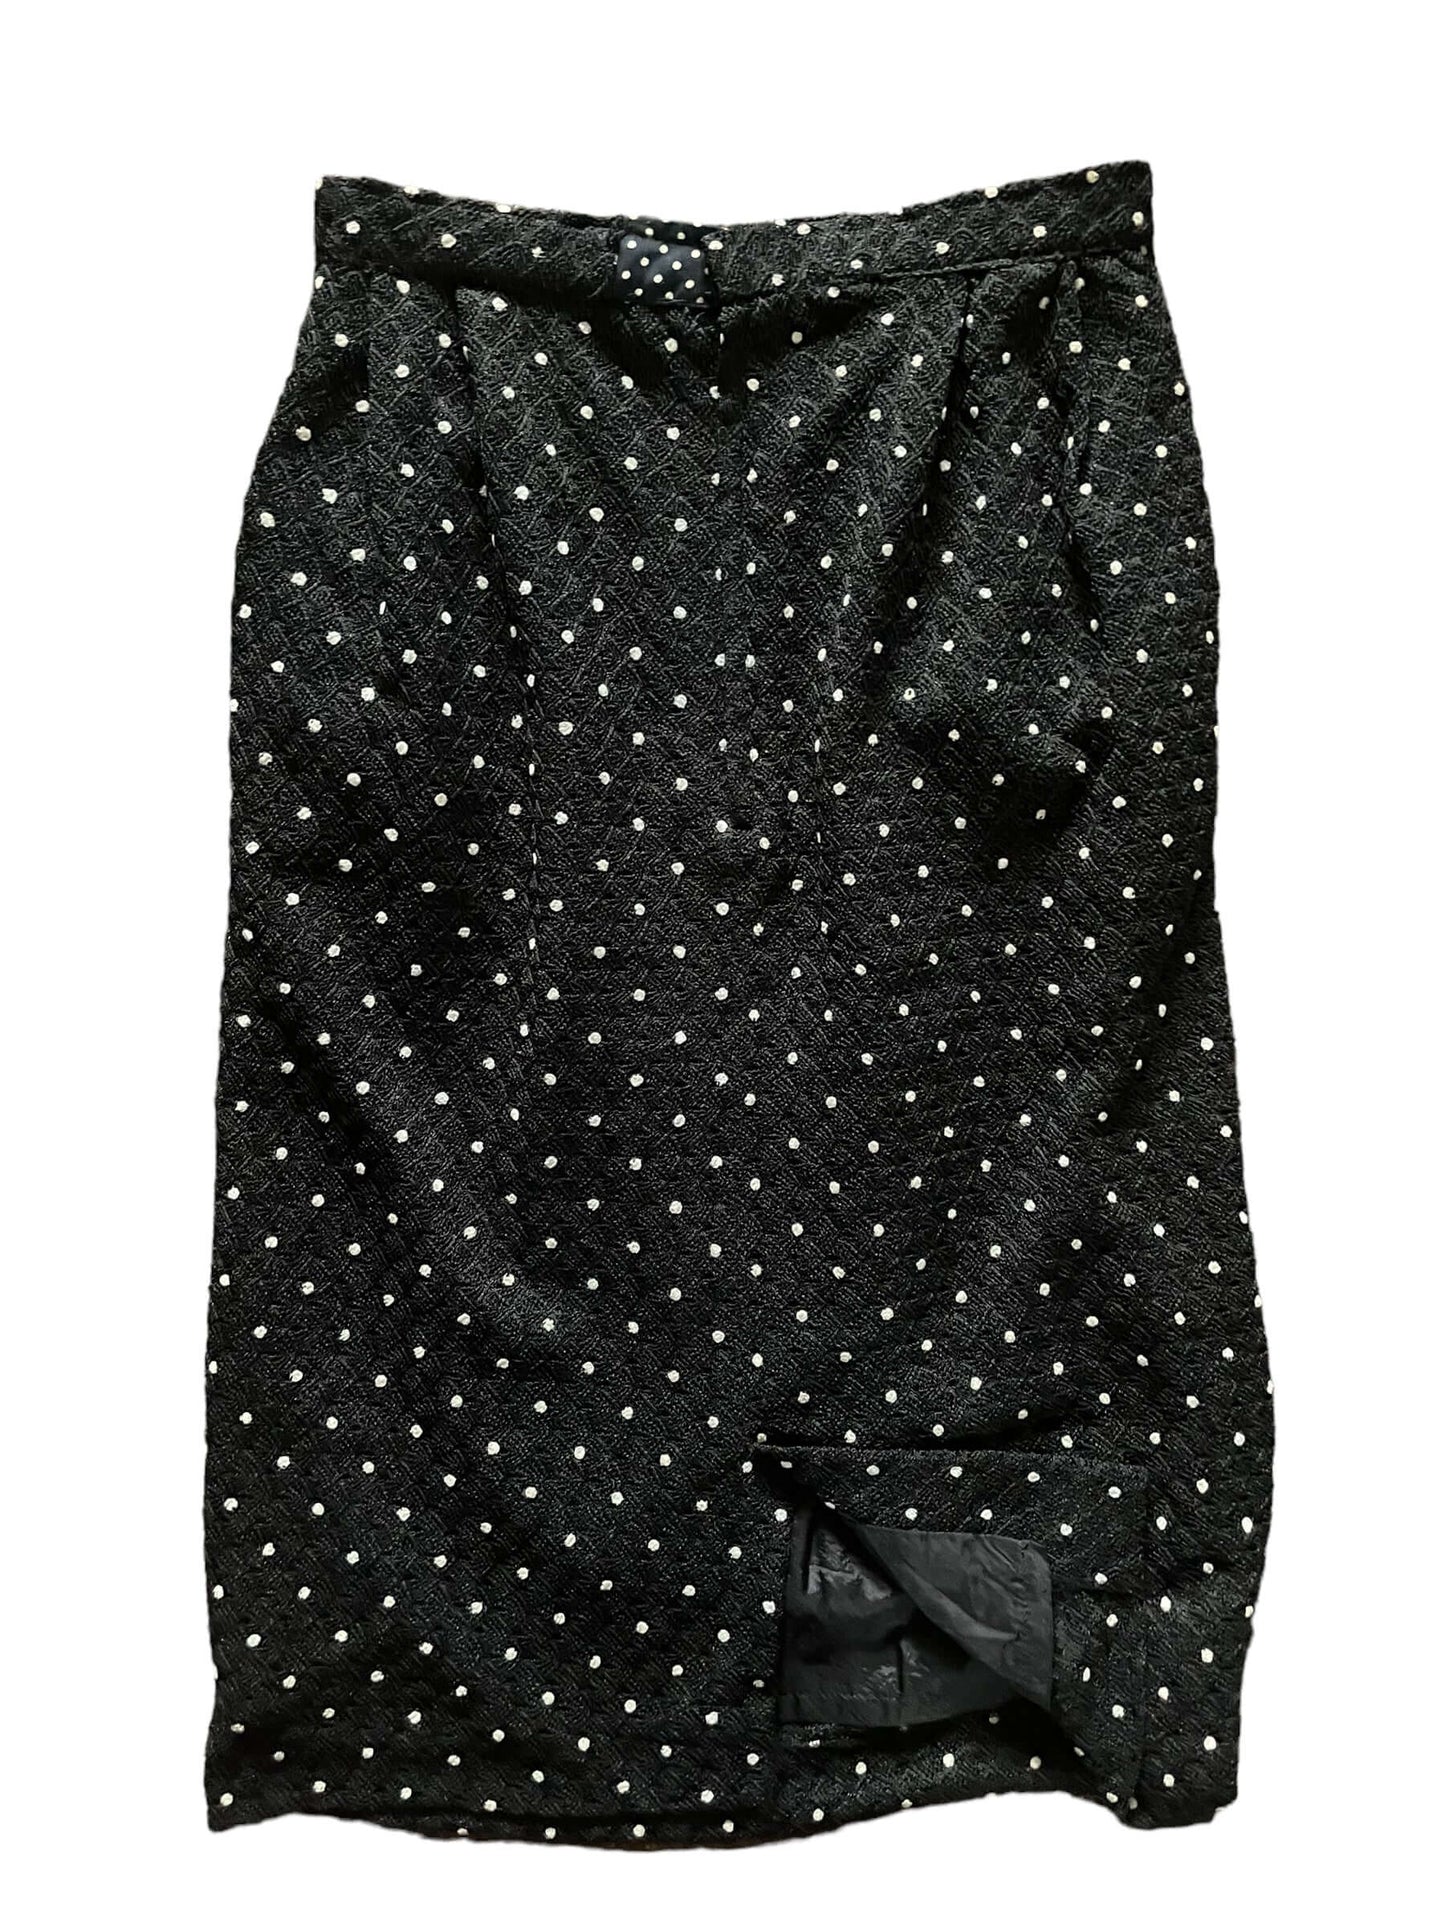 Full back view of Vintage 1940-50s Polka Dot Skirt Set |  Barn Owl Vintage Dresses | Seattle Vintage Ladies Clothing